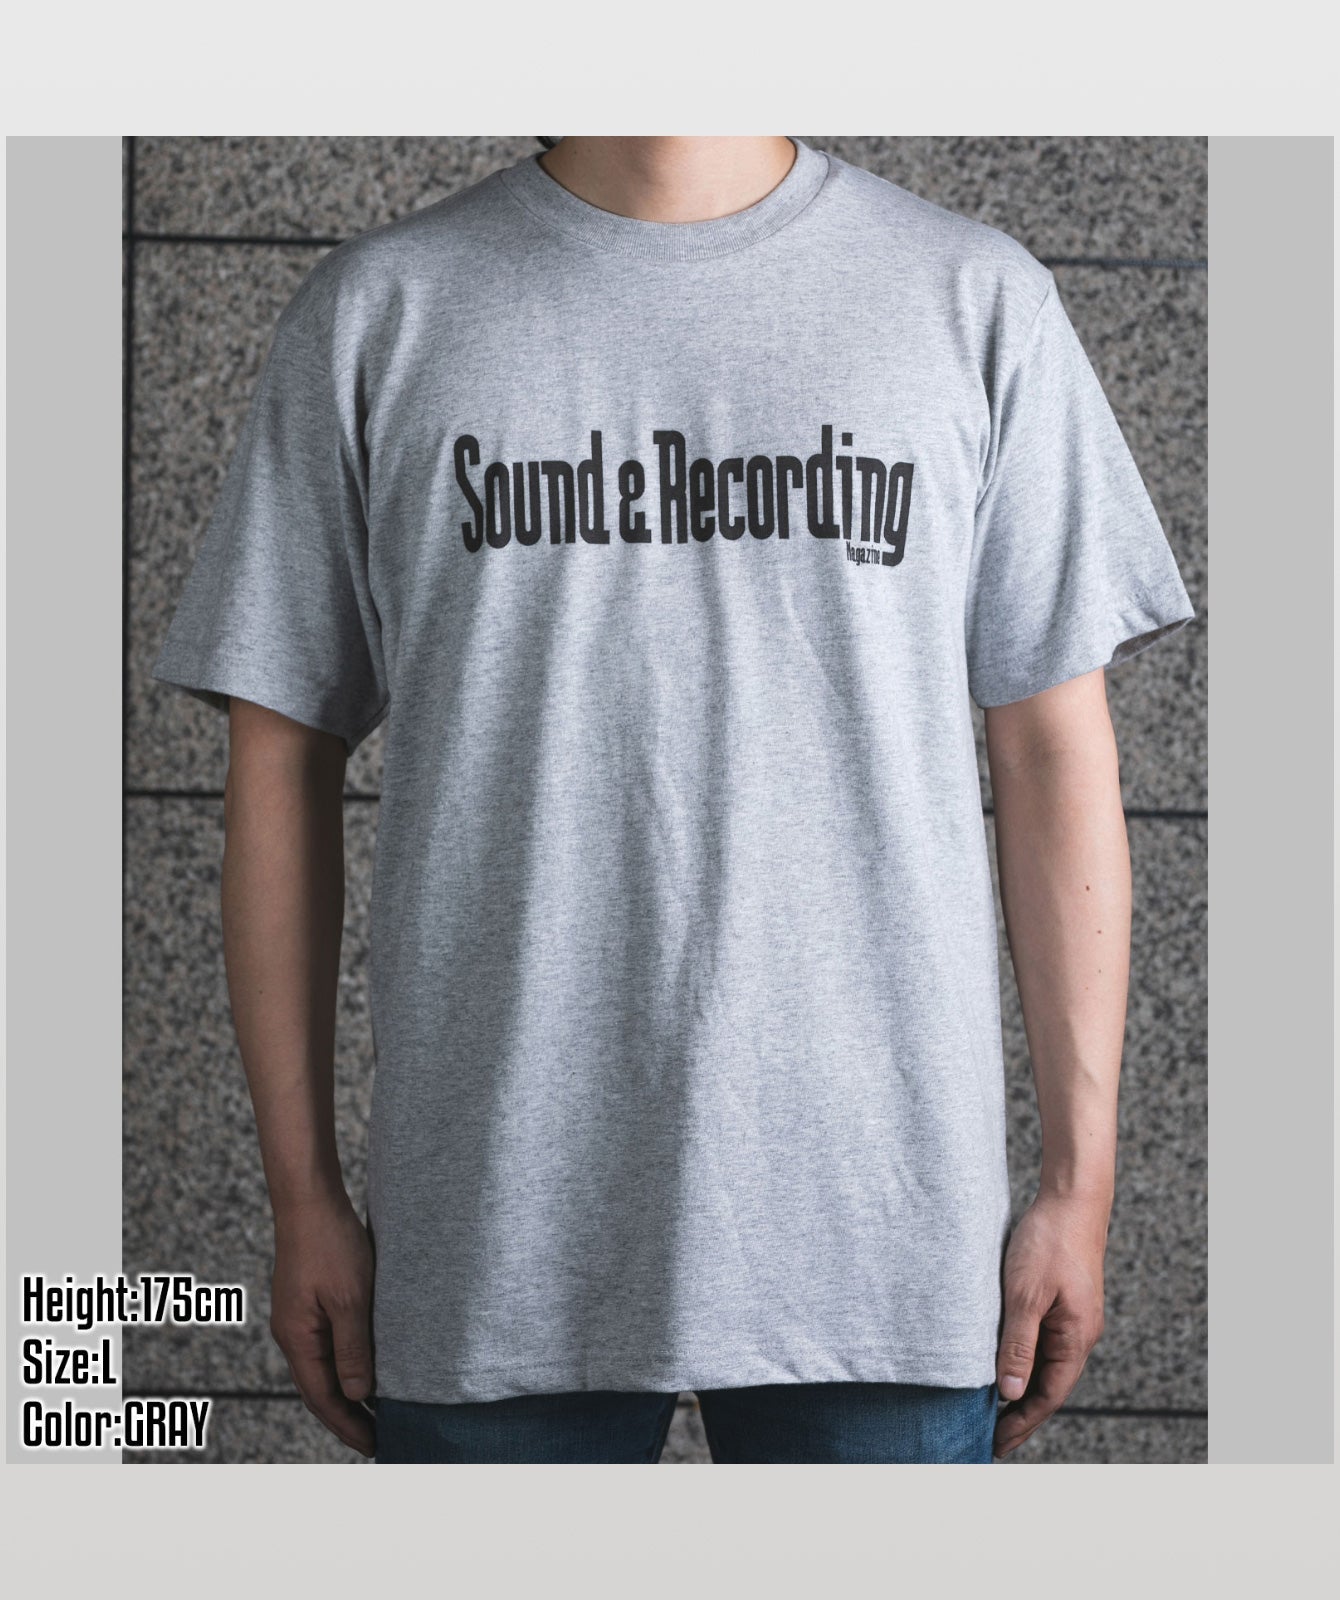 Sound & Recording Magazine オリジナルロゴ 杢グレー